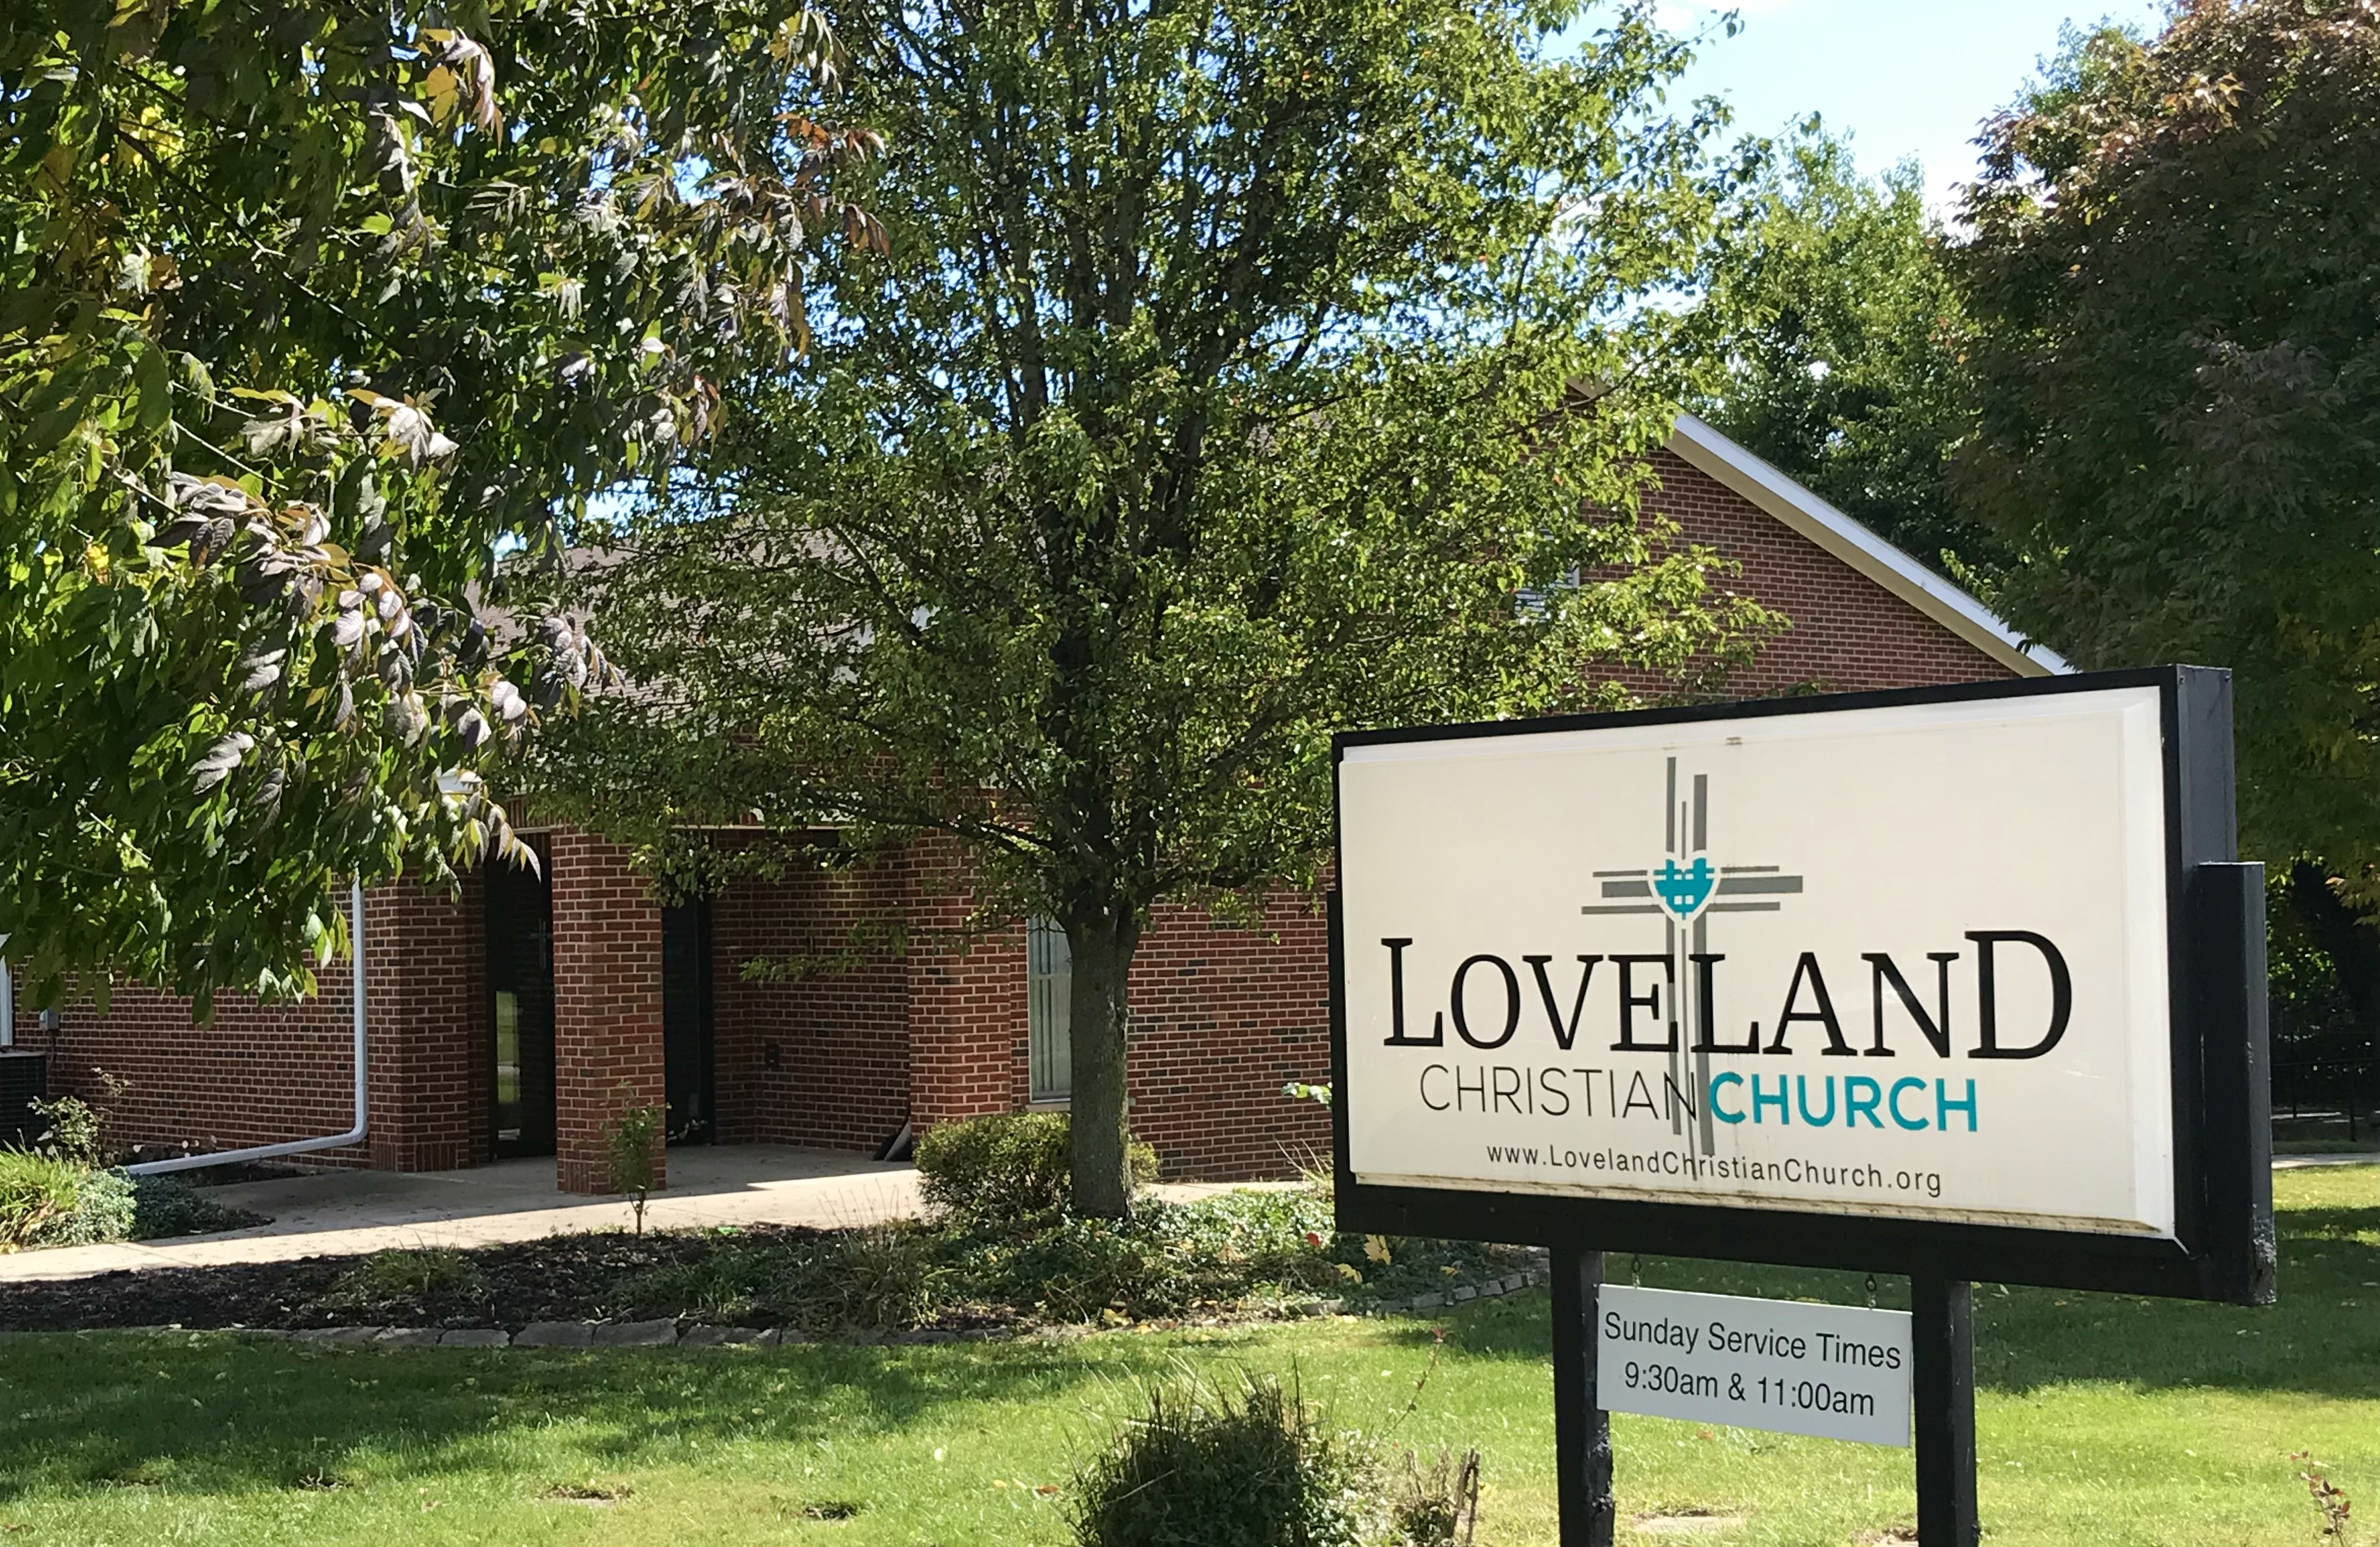 Loveland Christian Church building